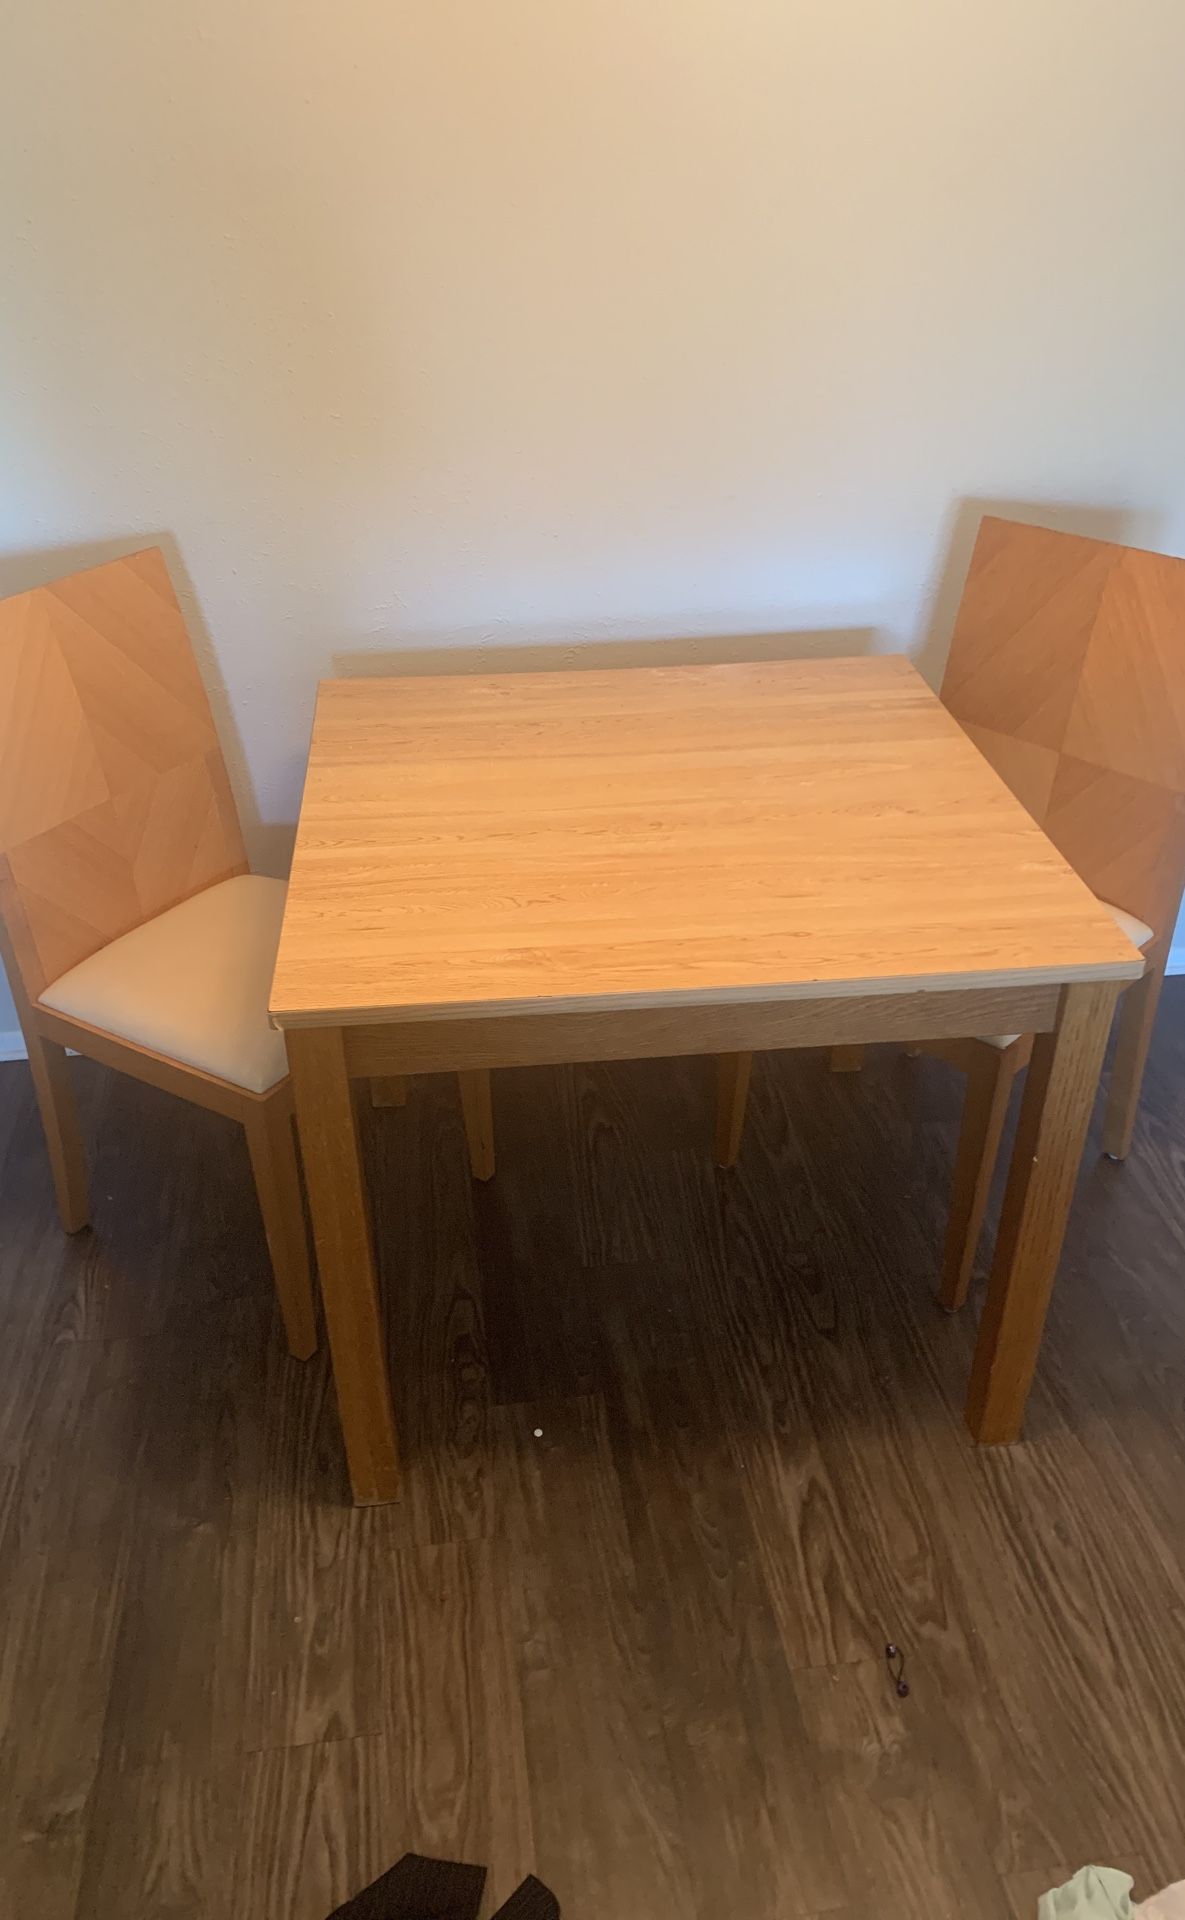 Small apt size kitchen table